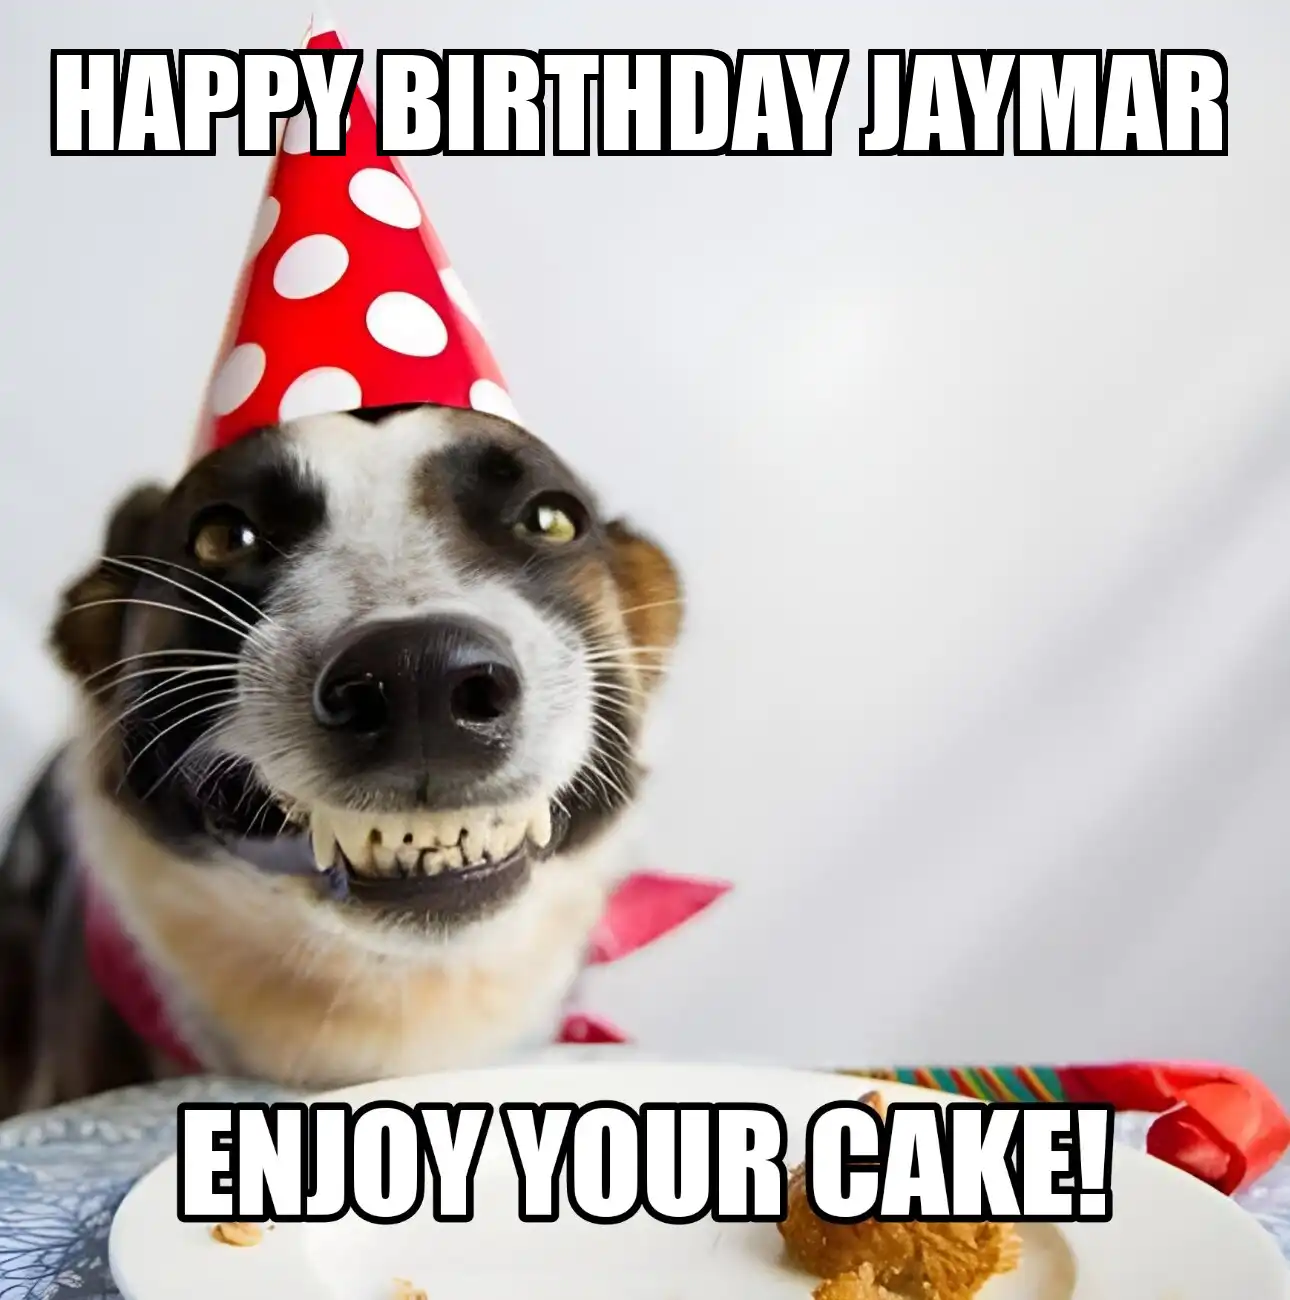 Happy Birthday Jaymar Enjoy Your Cake Dog Meme